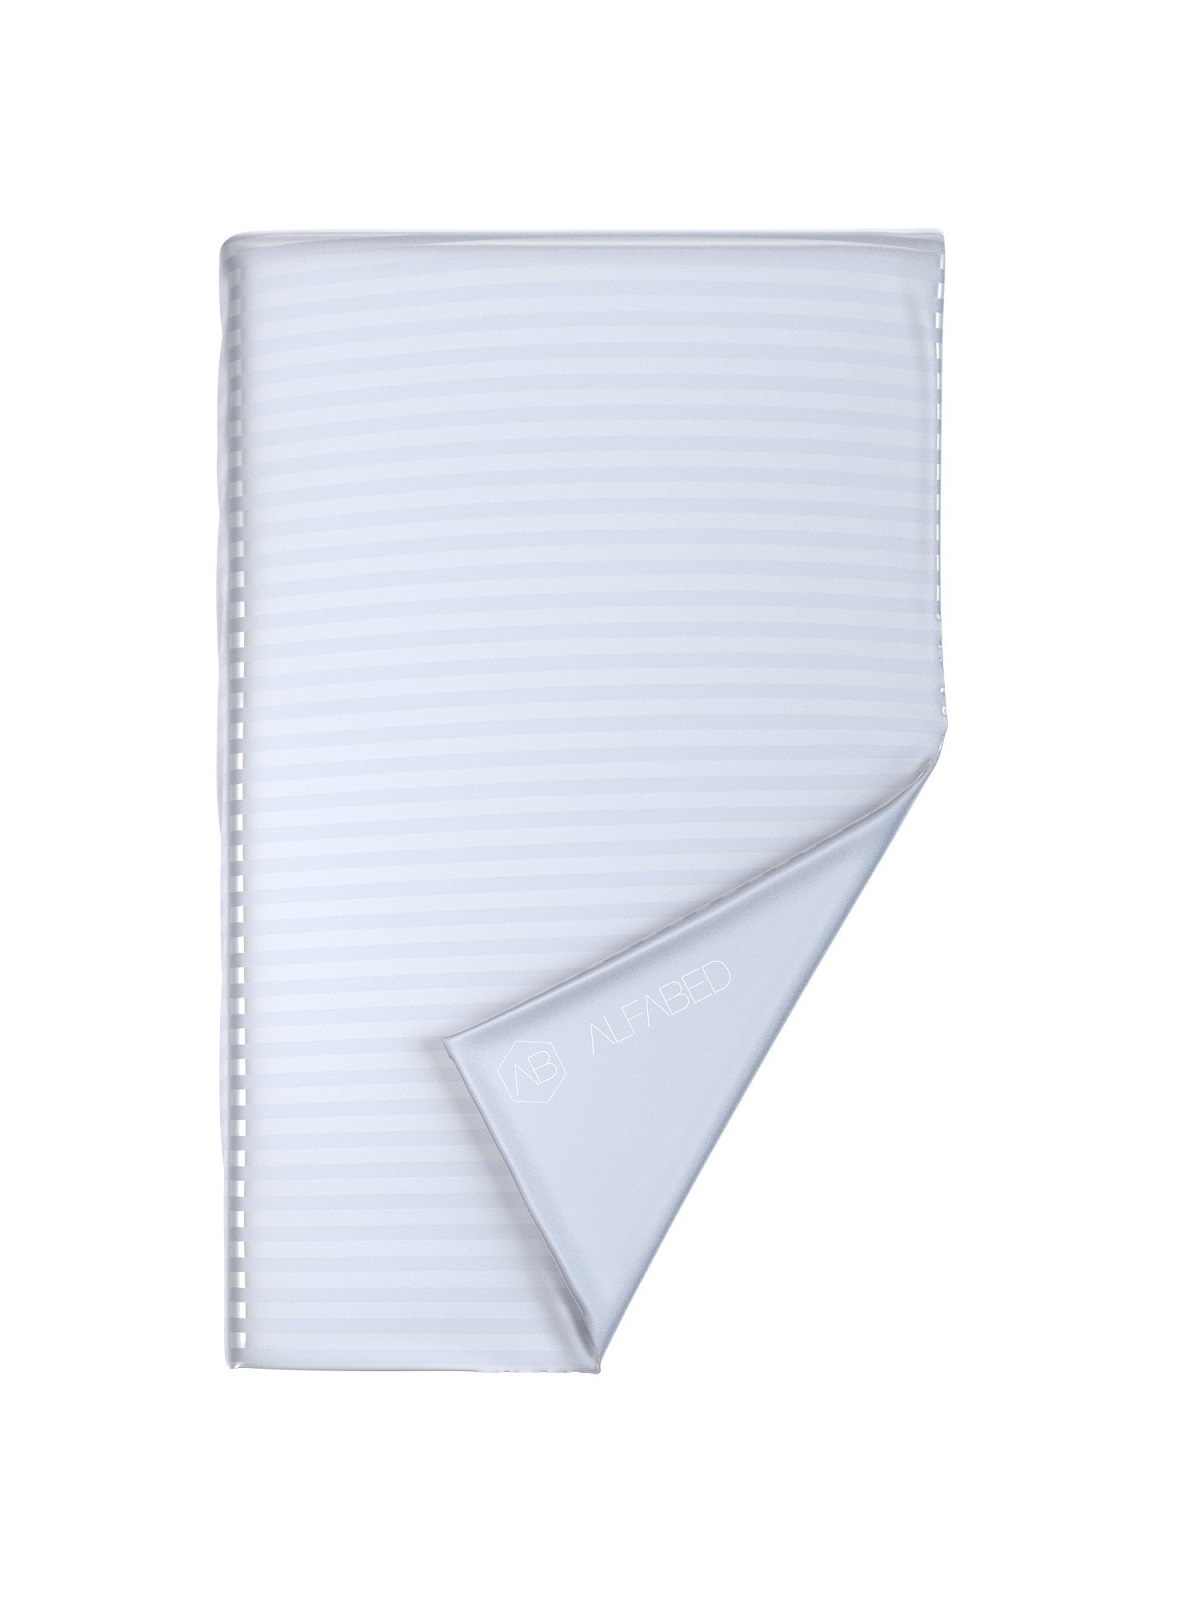 Topper Sheet-Case Premium Woven Cotton Sateen Stripe White H H-151